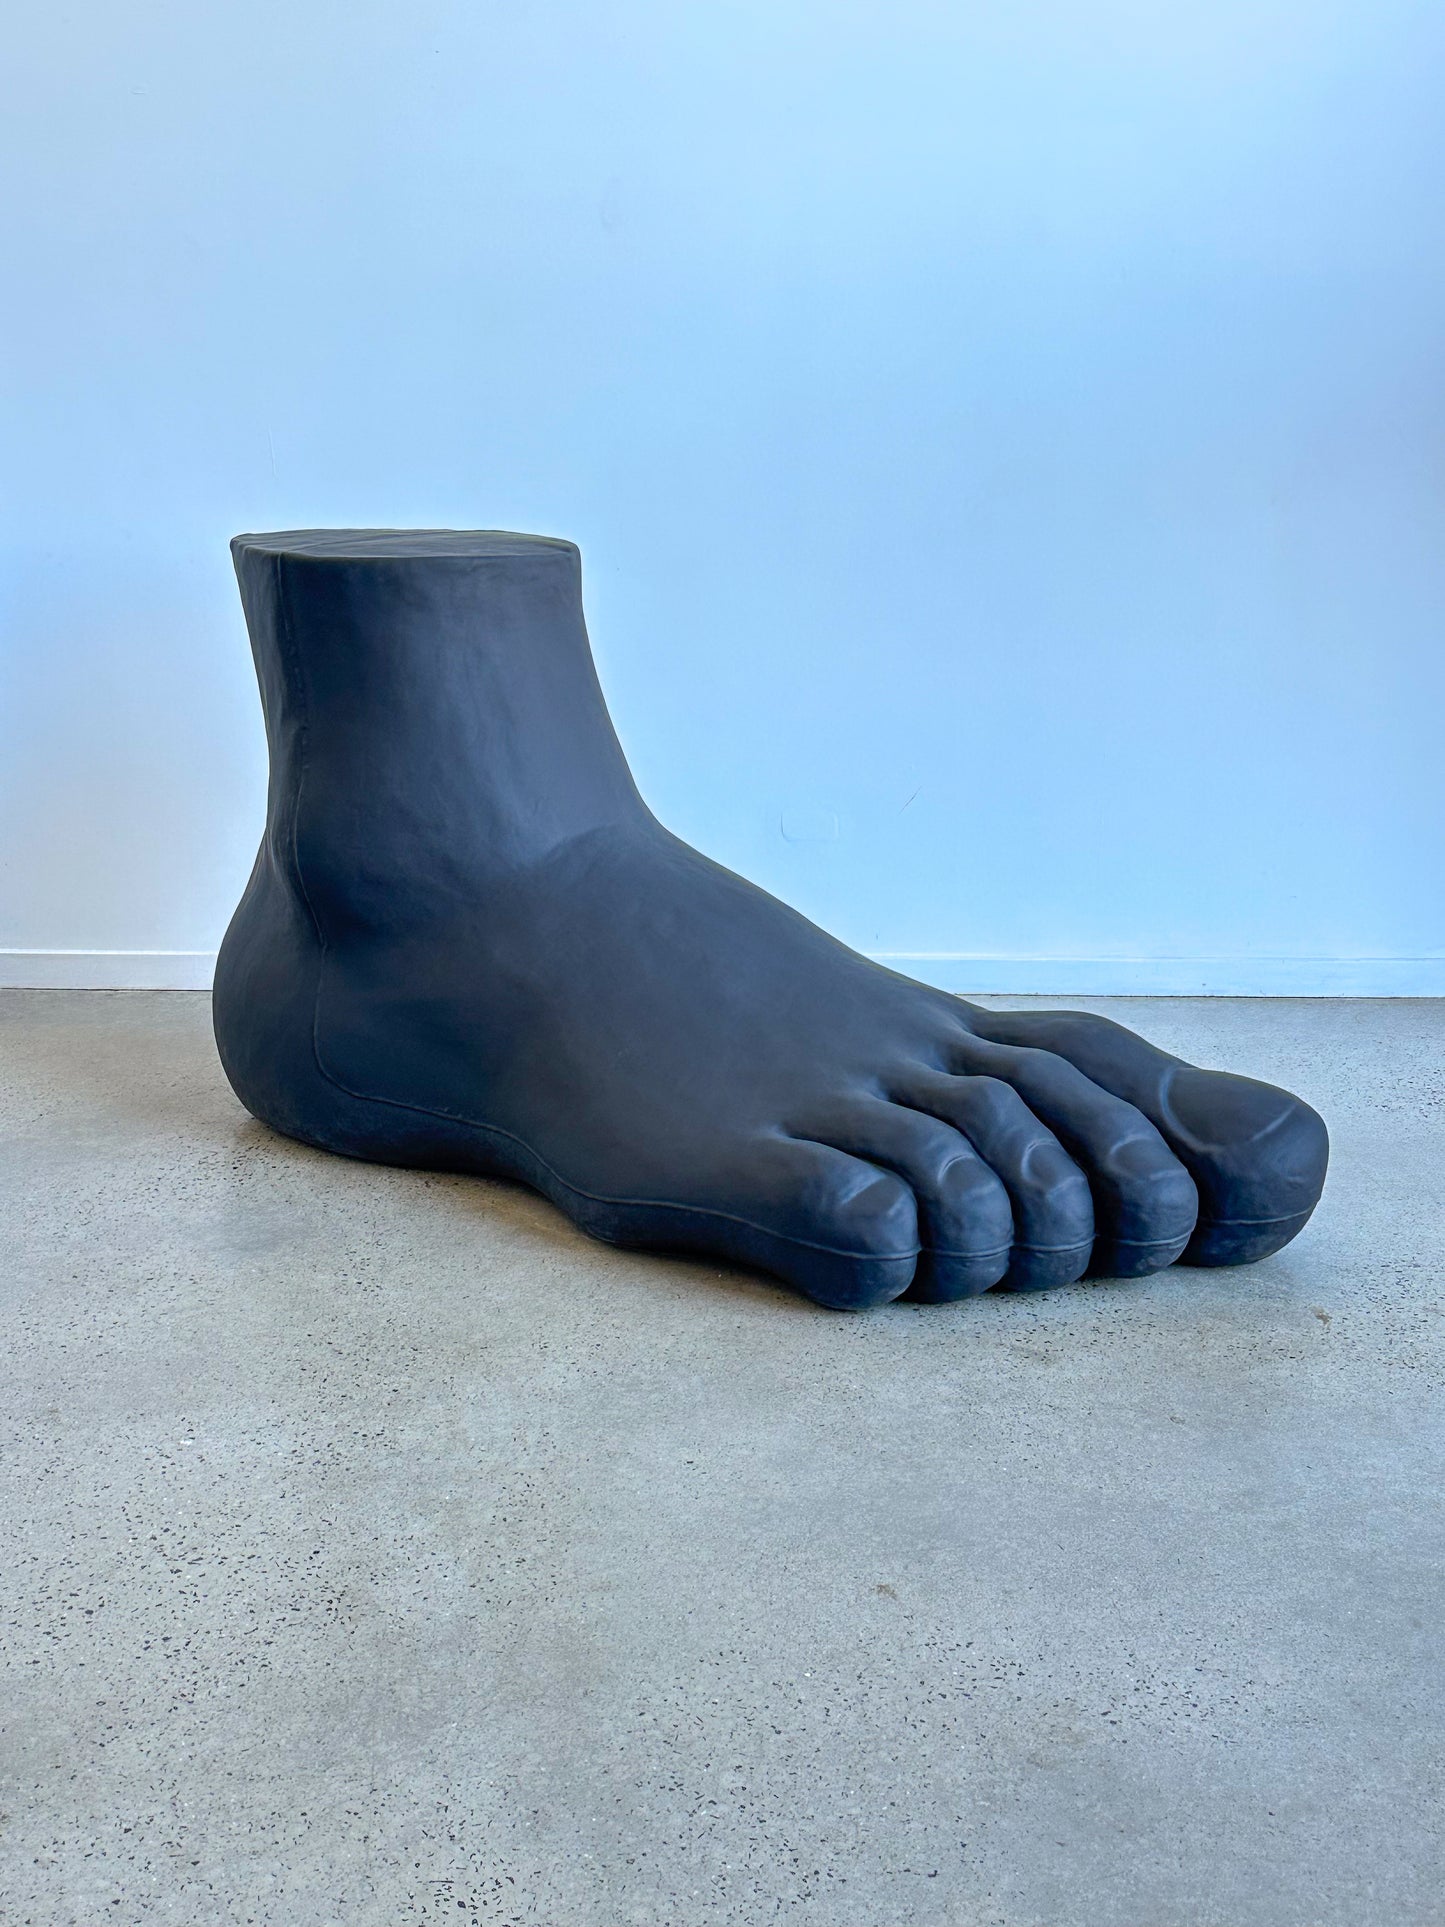 " UP 7 " Gaetano Pesce for B&B Italian Sculptural Furniture Rubber Foot 2000 Edition